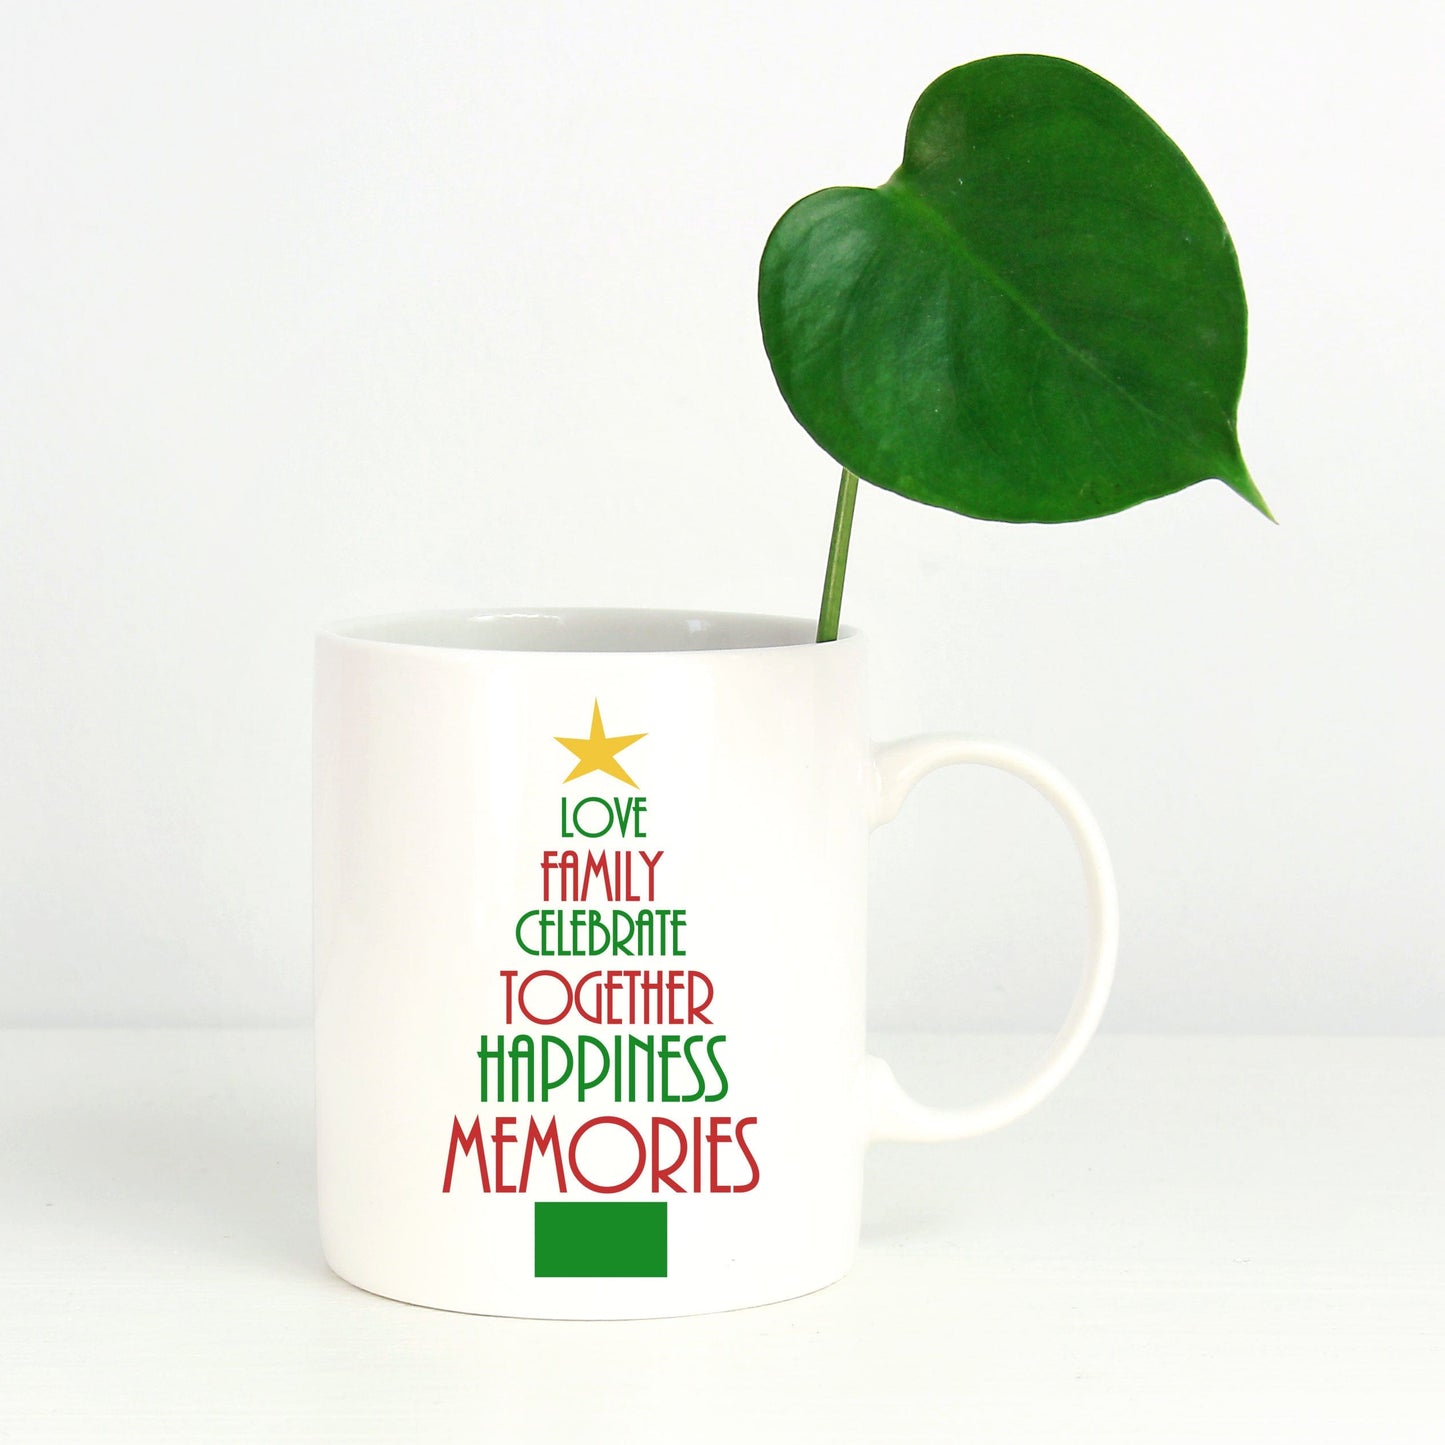 Holiday Coffee Mug - Celebrate Family Memories